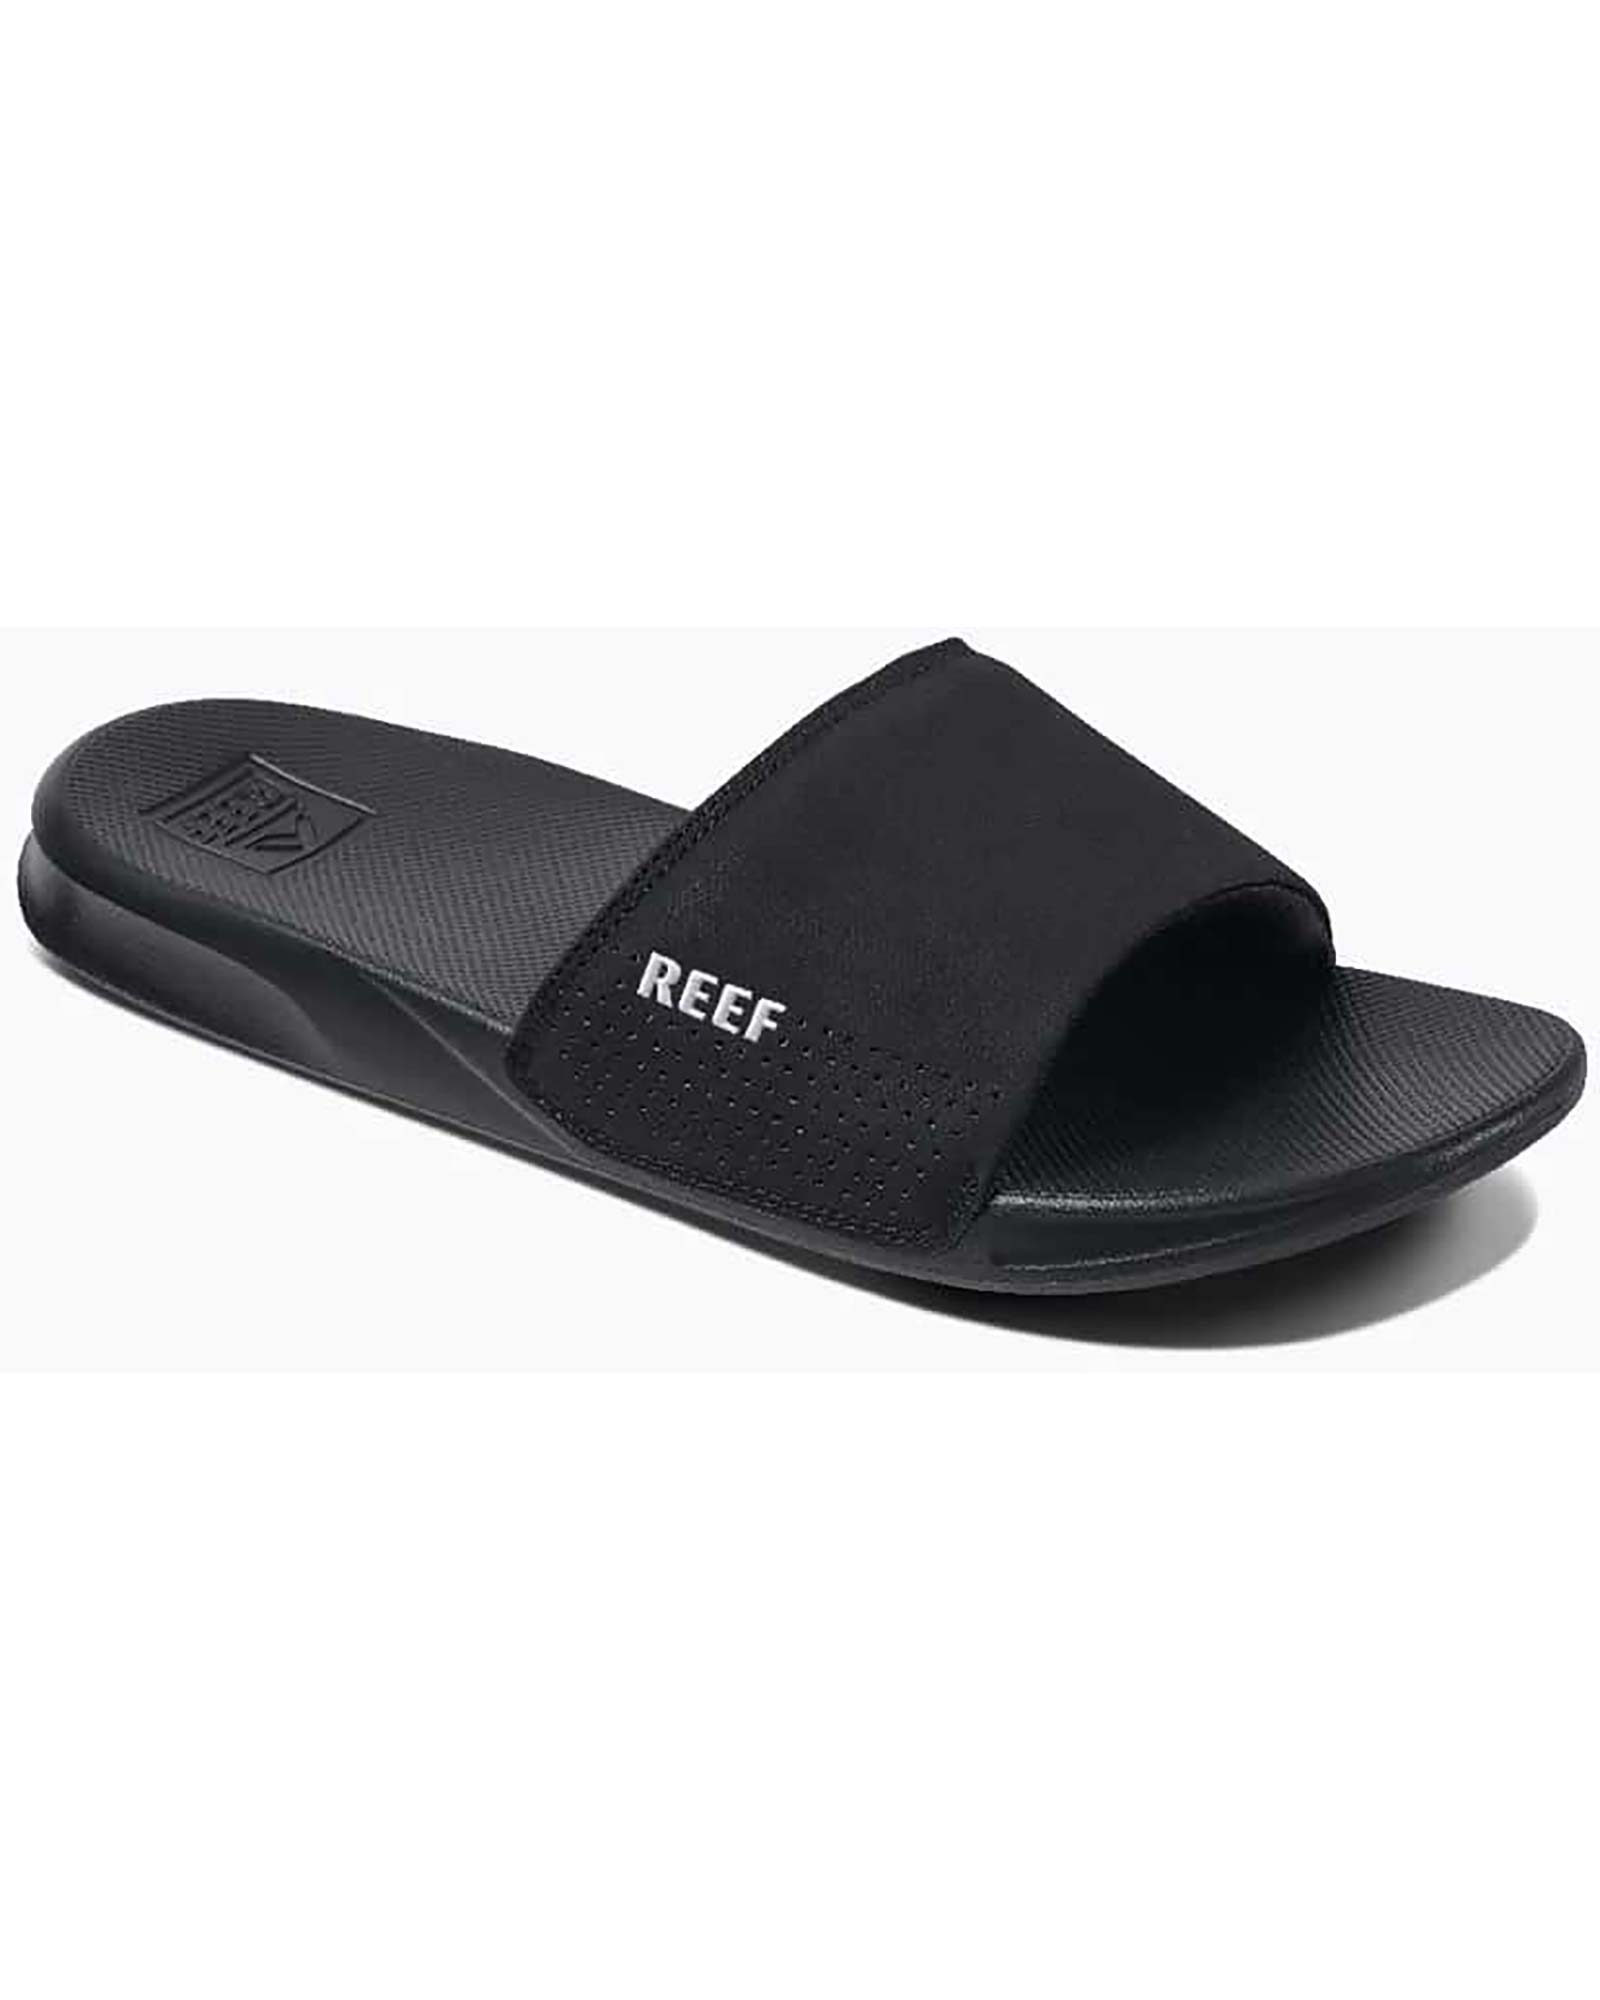 Reef Men's One Slide Sandals